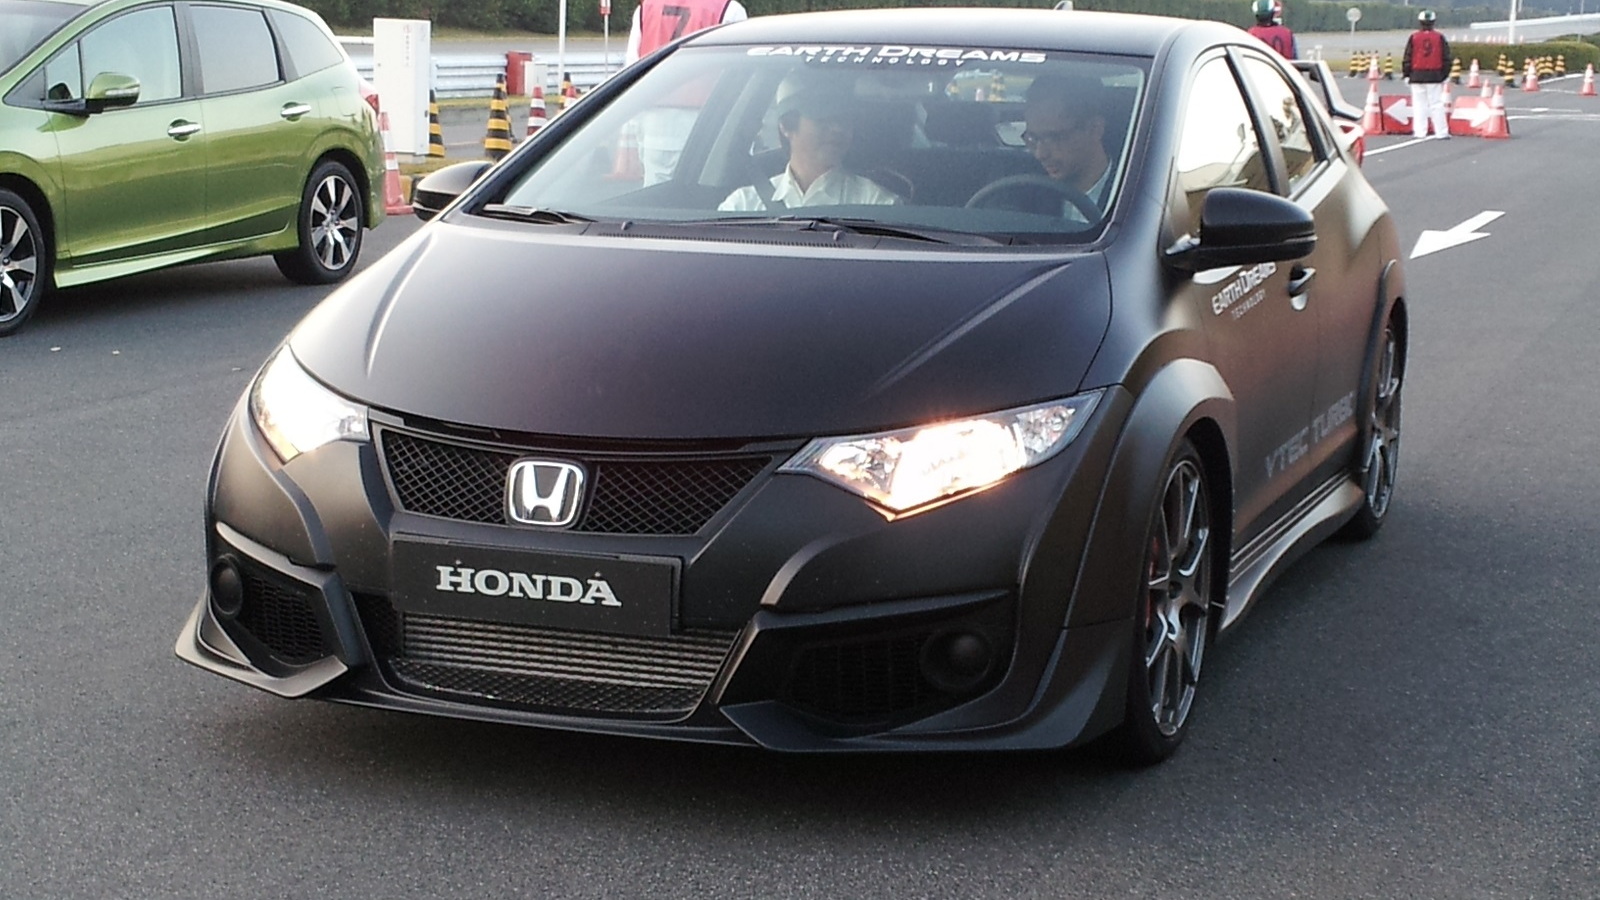 Honda Civic Type R prototype, Honda Proving Ground, Tochigi, Japan, Nov 2013